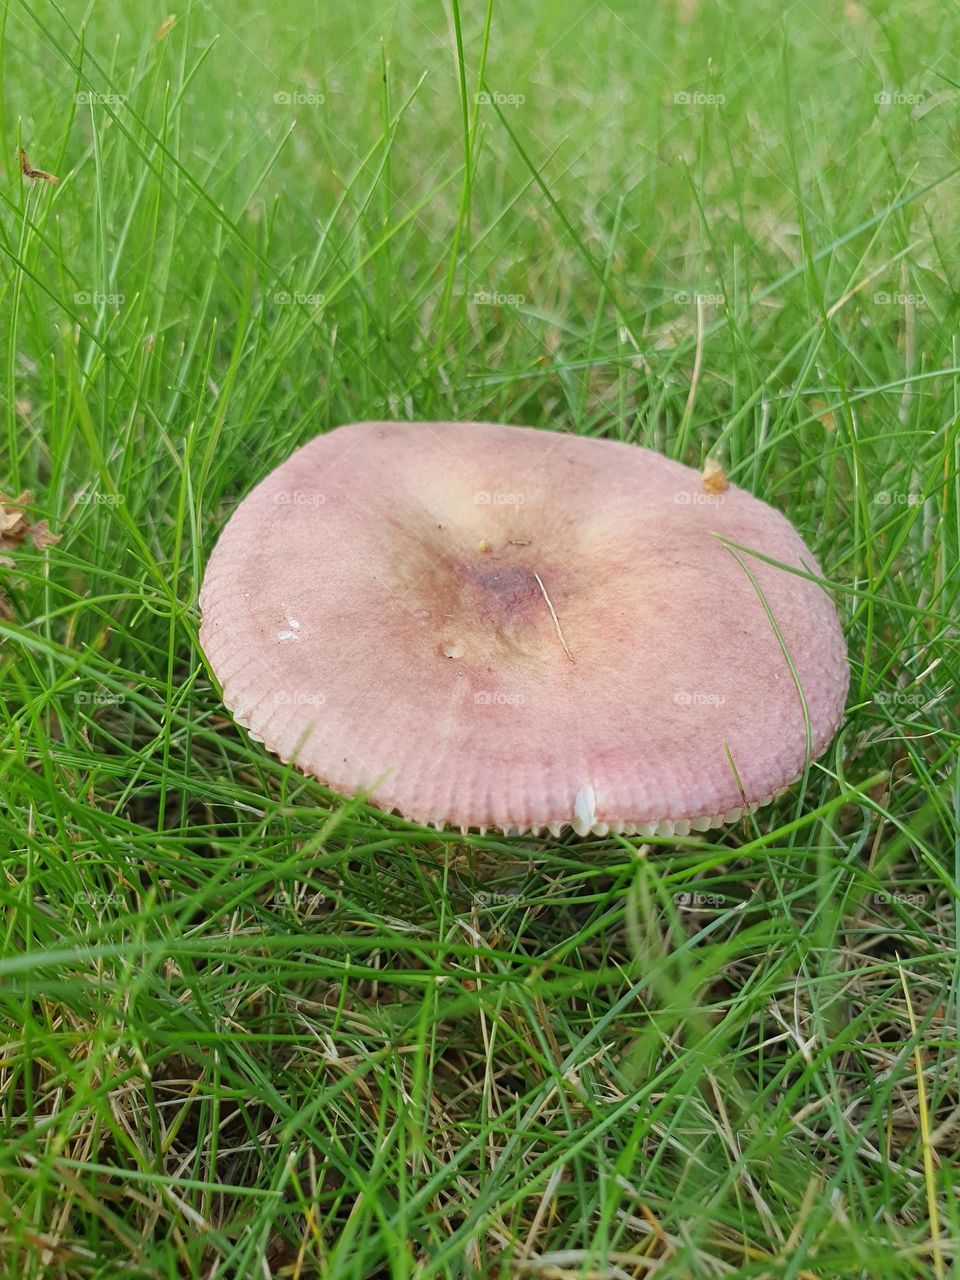 what mushroom?